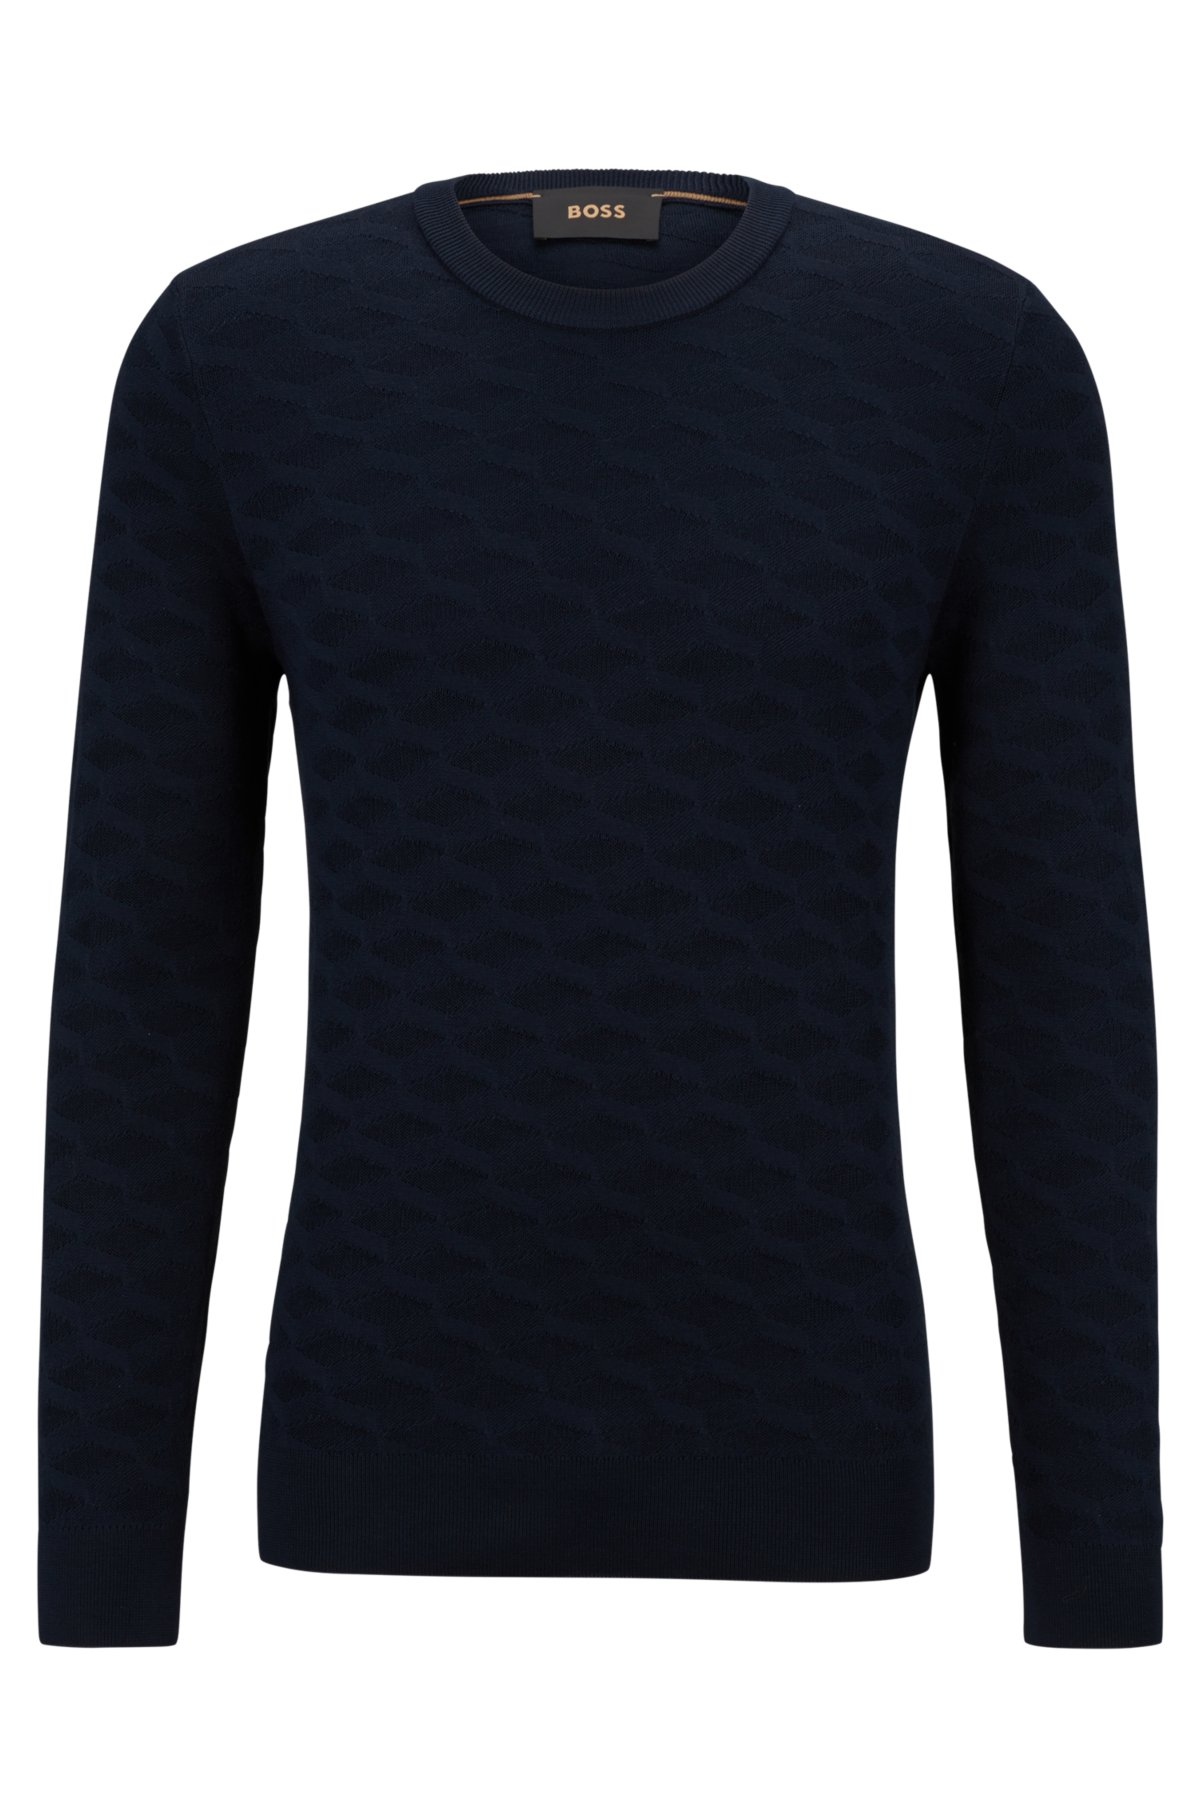 Louis Vuitton Damier Silk Sweater - Grey Sweaters, Clothing